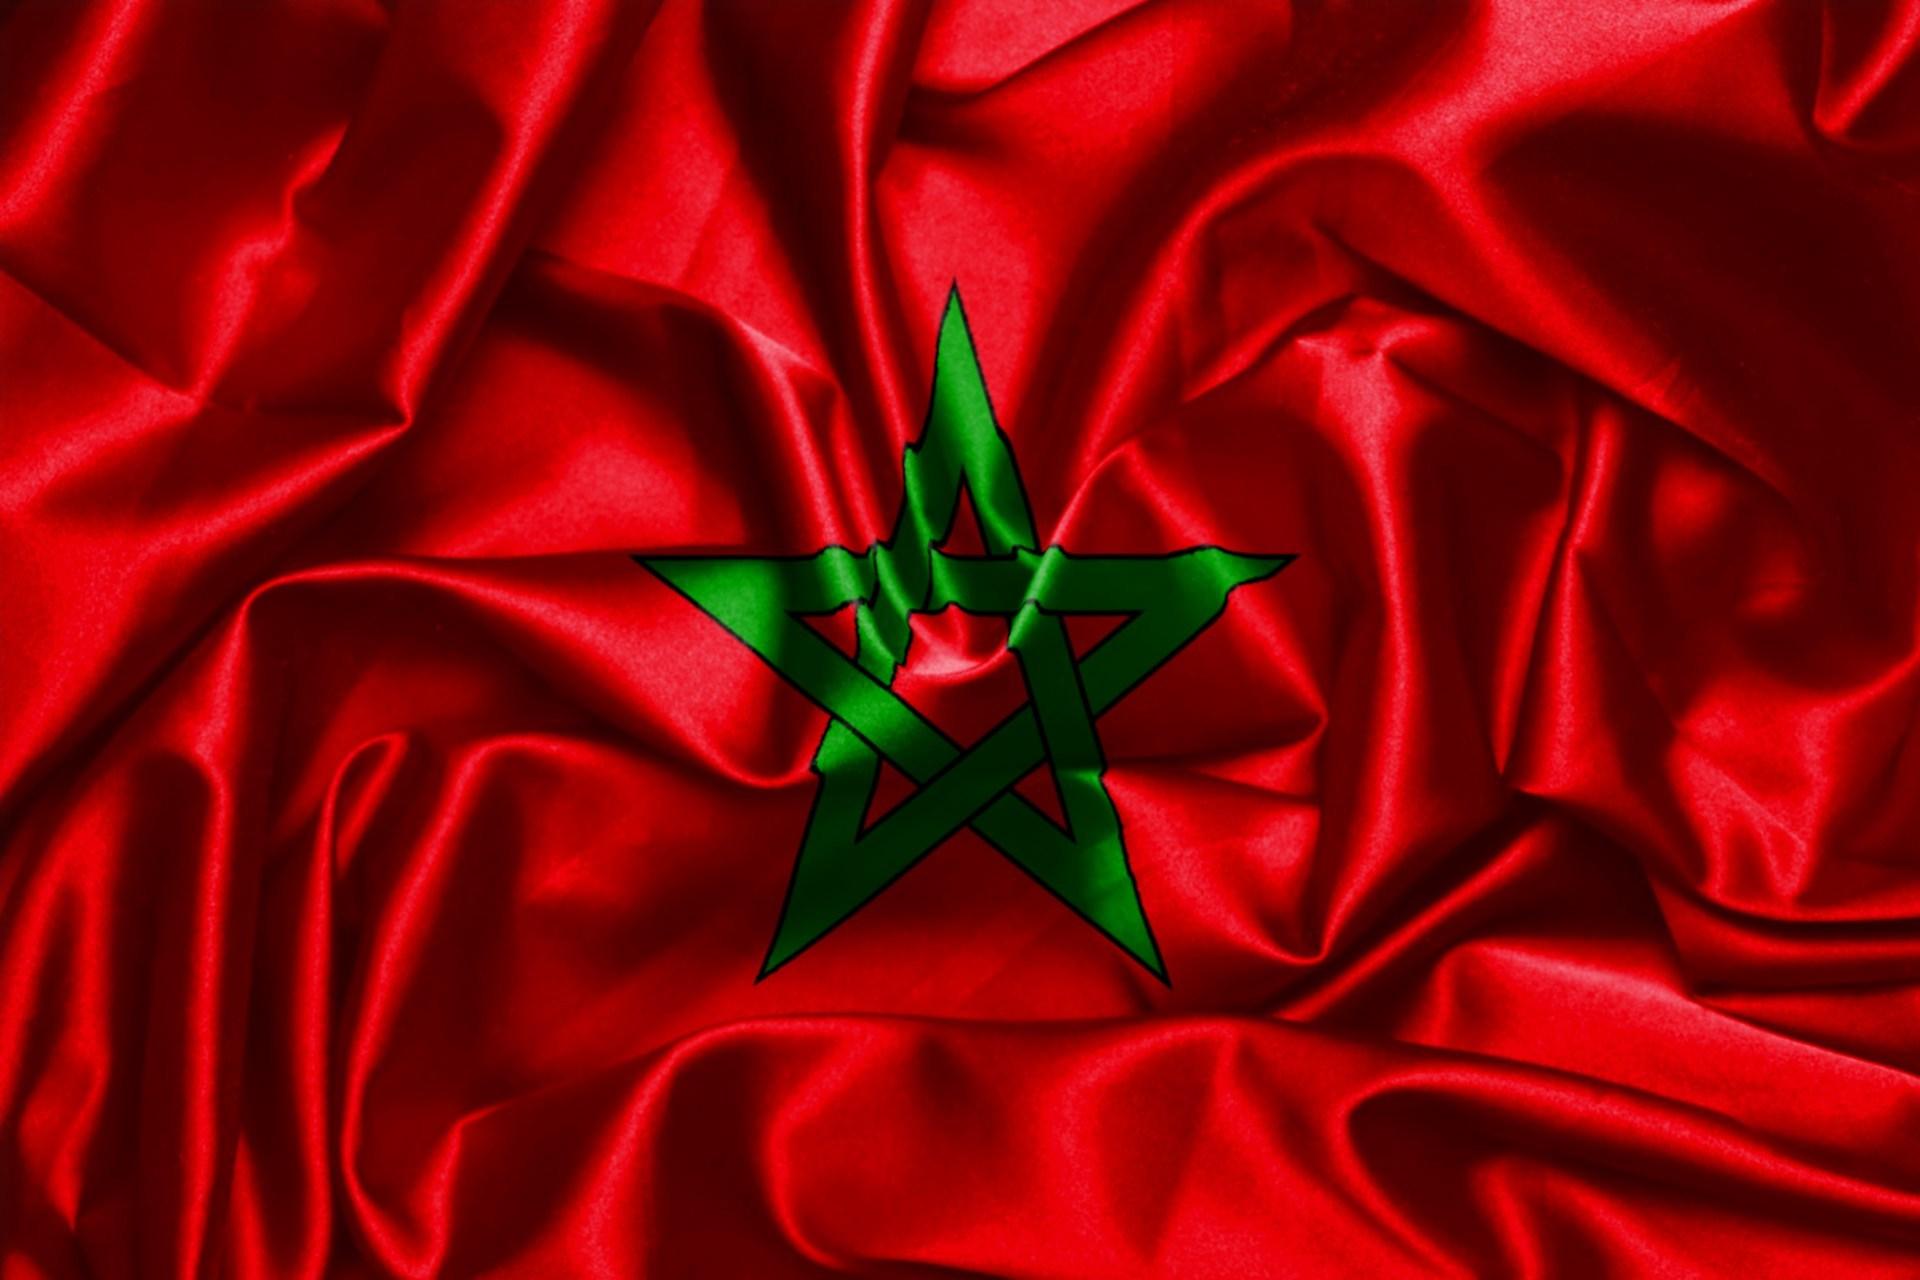 Morocco Flag HD Image & Wallpaper 2016 free download